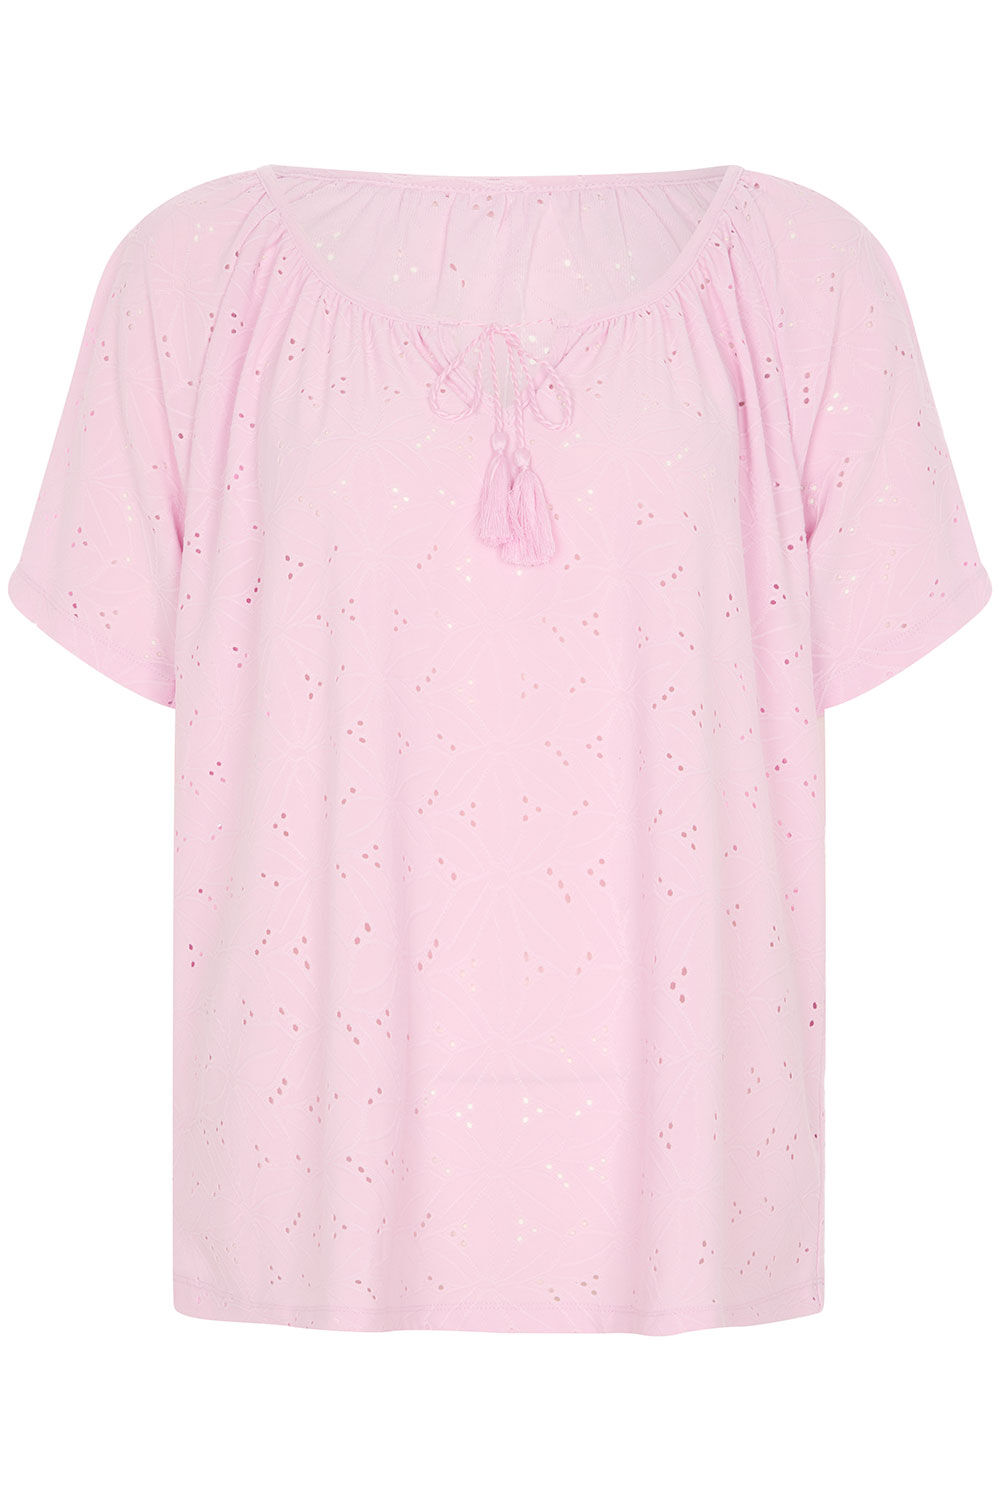 Bonmarche Pink Short Sleeve Broderie Design Jersey T-Shirt, Size: 10